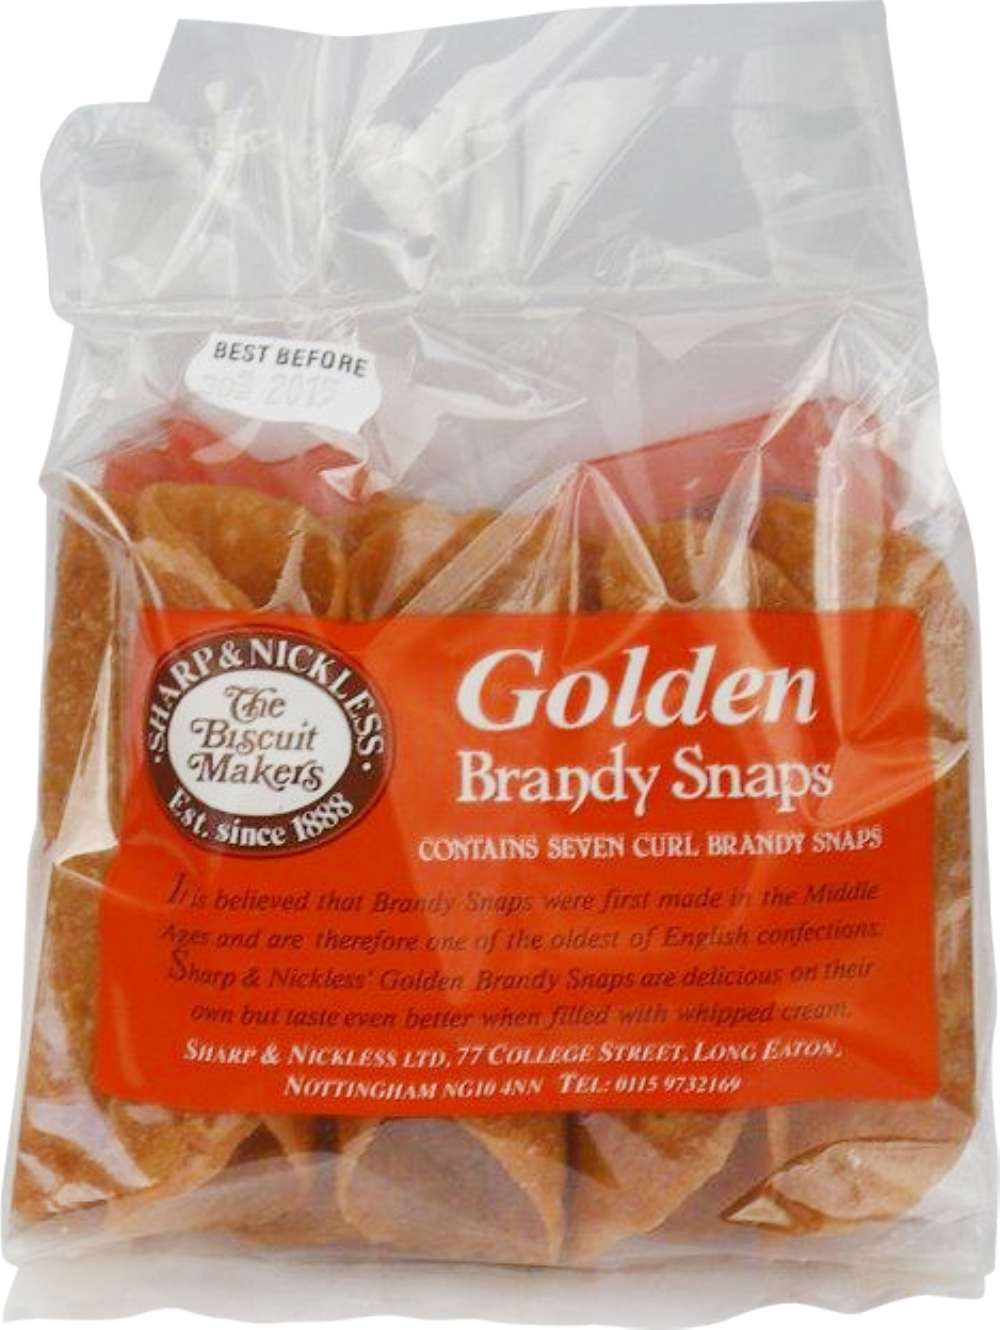 SHARP & NICKLESS 7 Golden Brandy Snaps